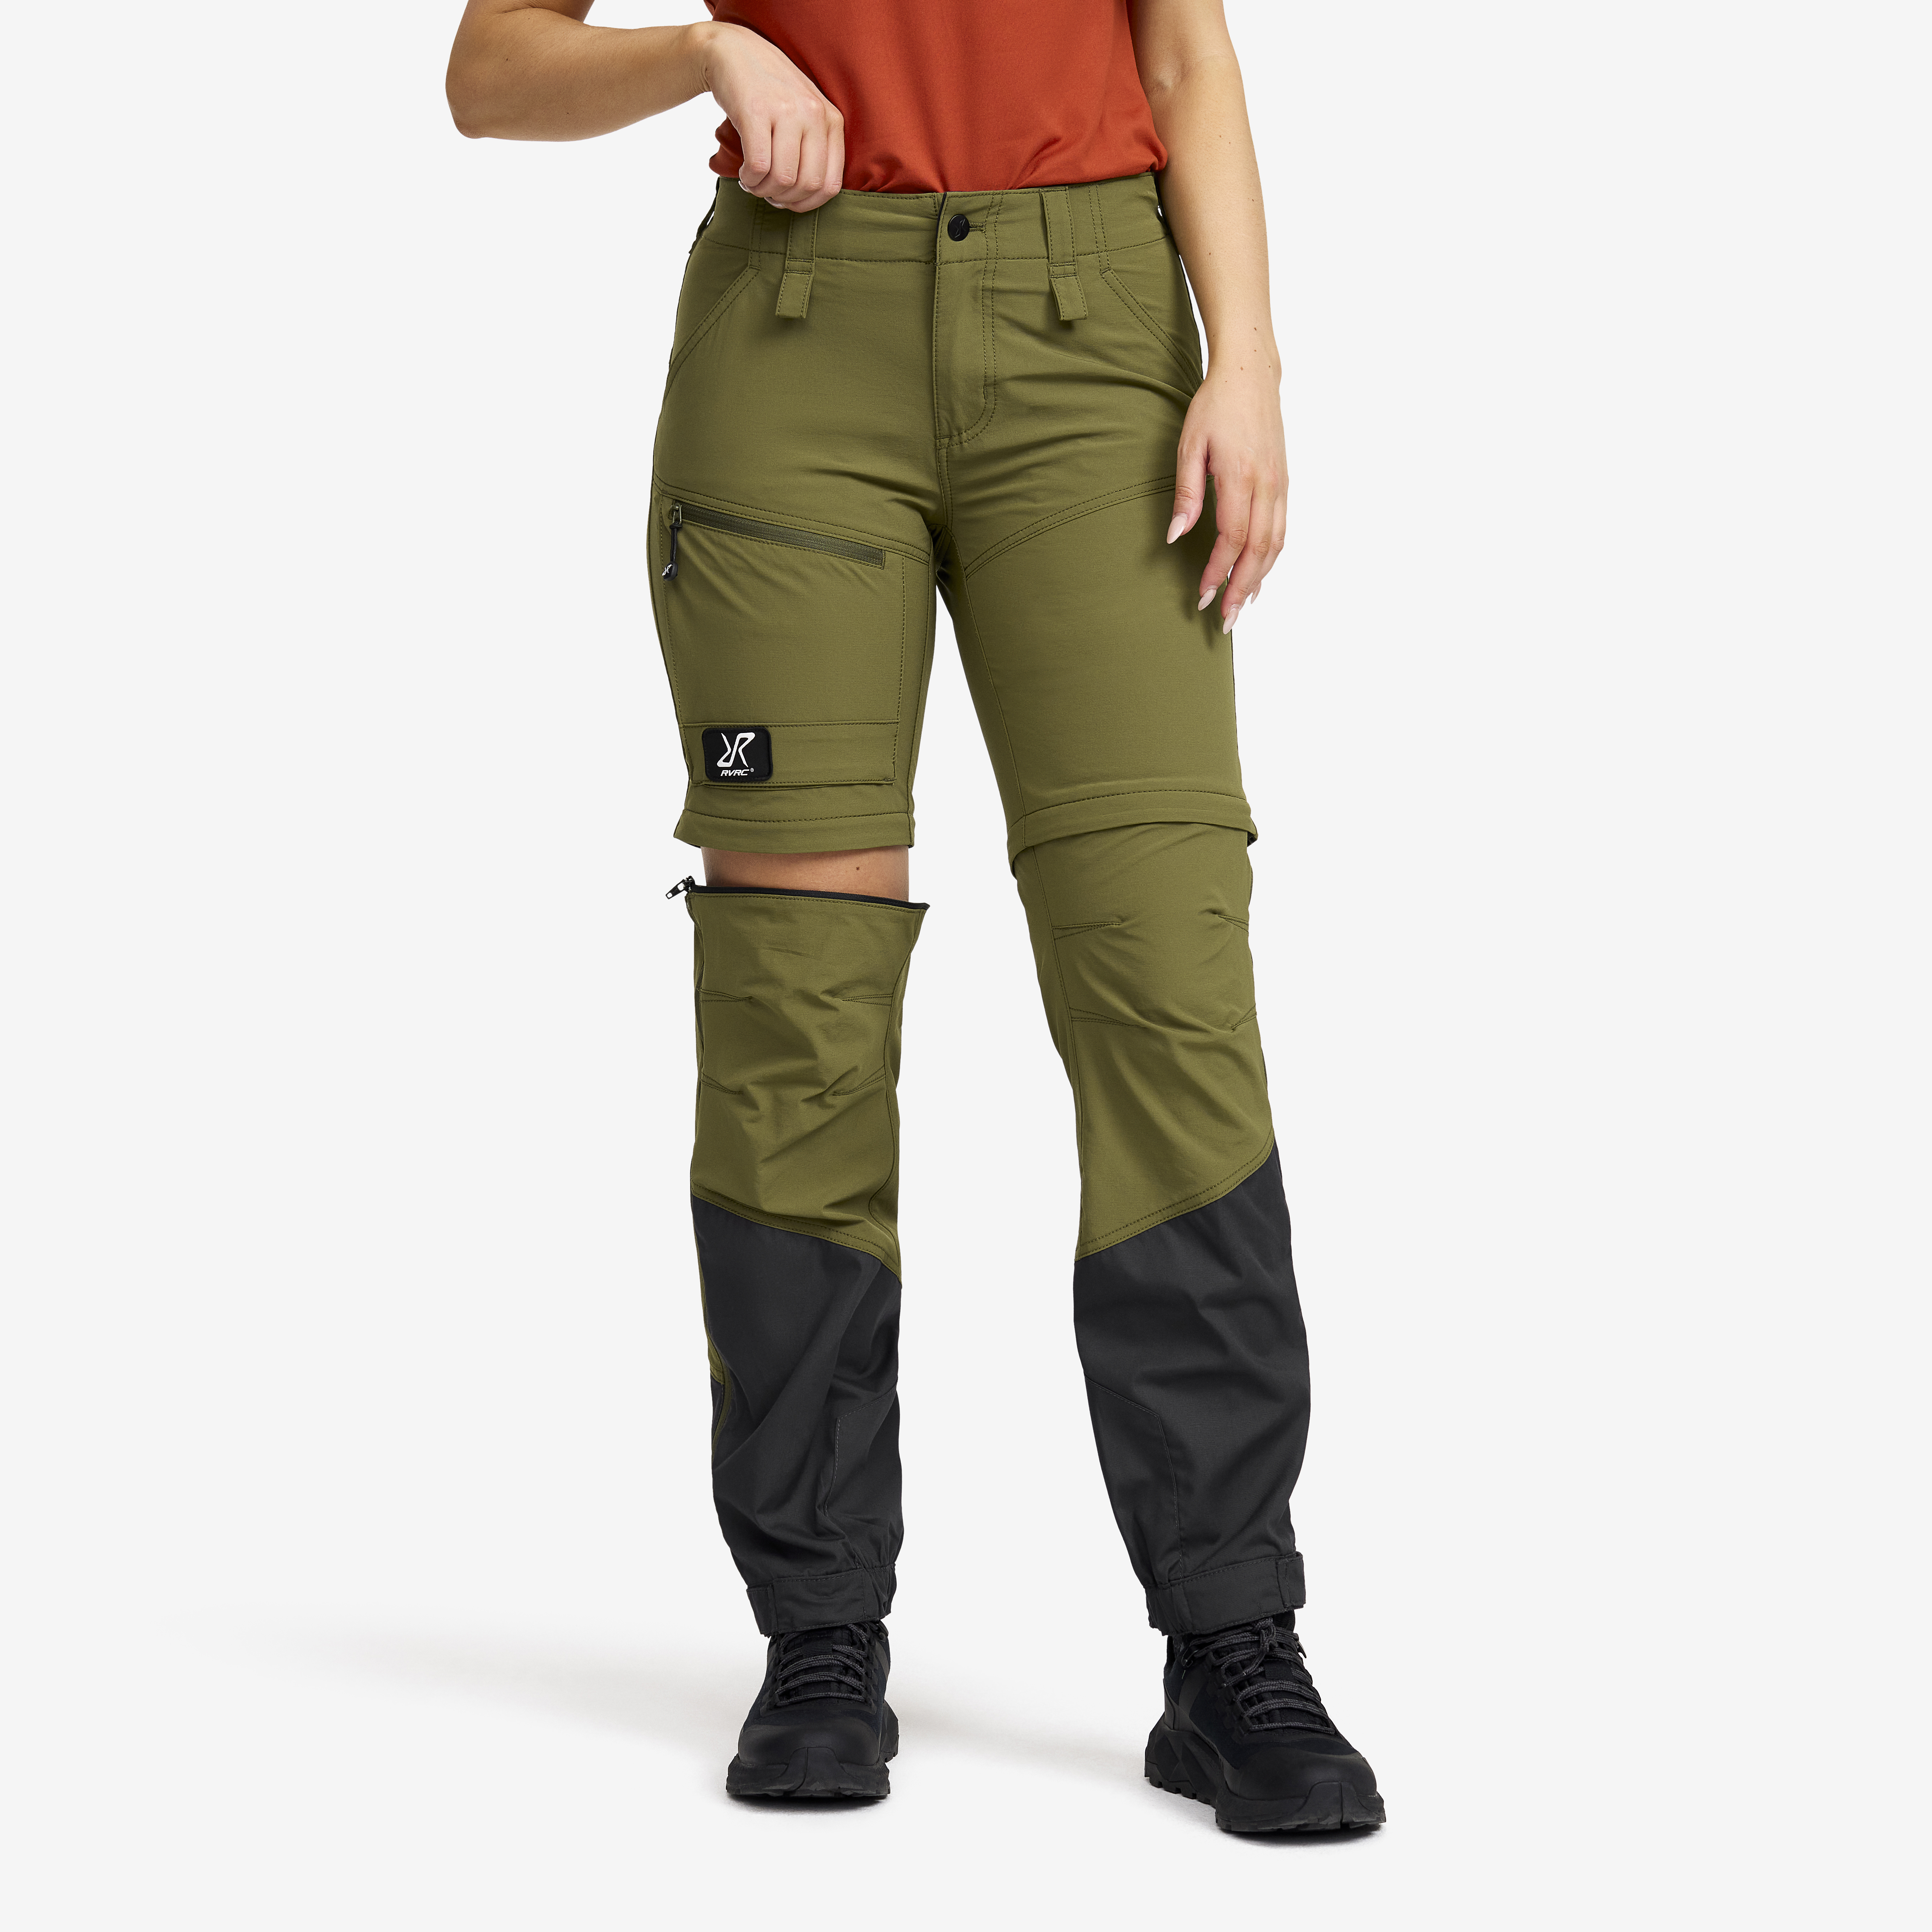 Range Pro Zip-off Pants  Burnt Olive/Anthracite Mujeres